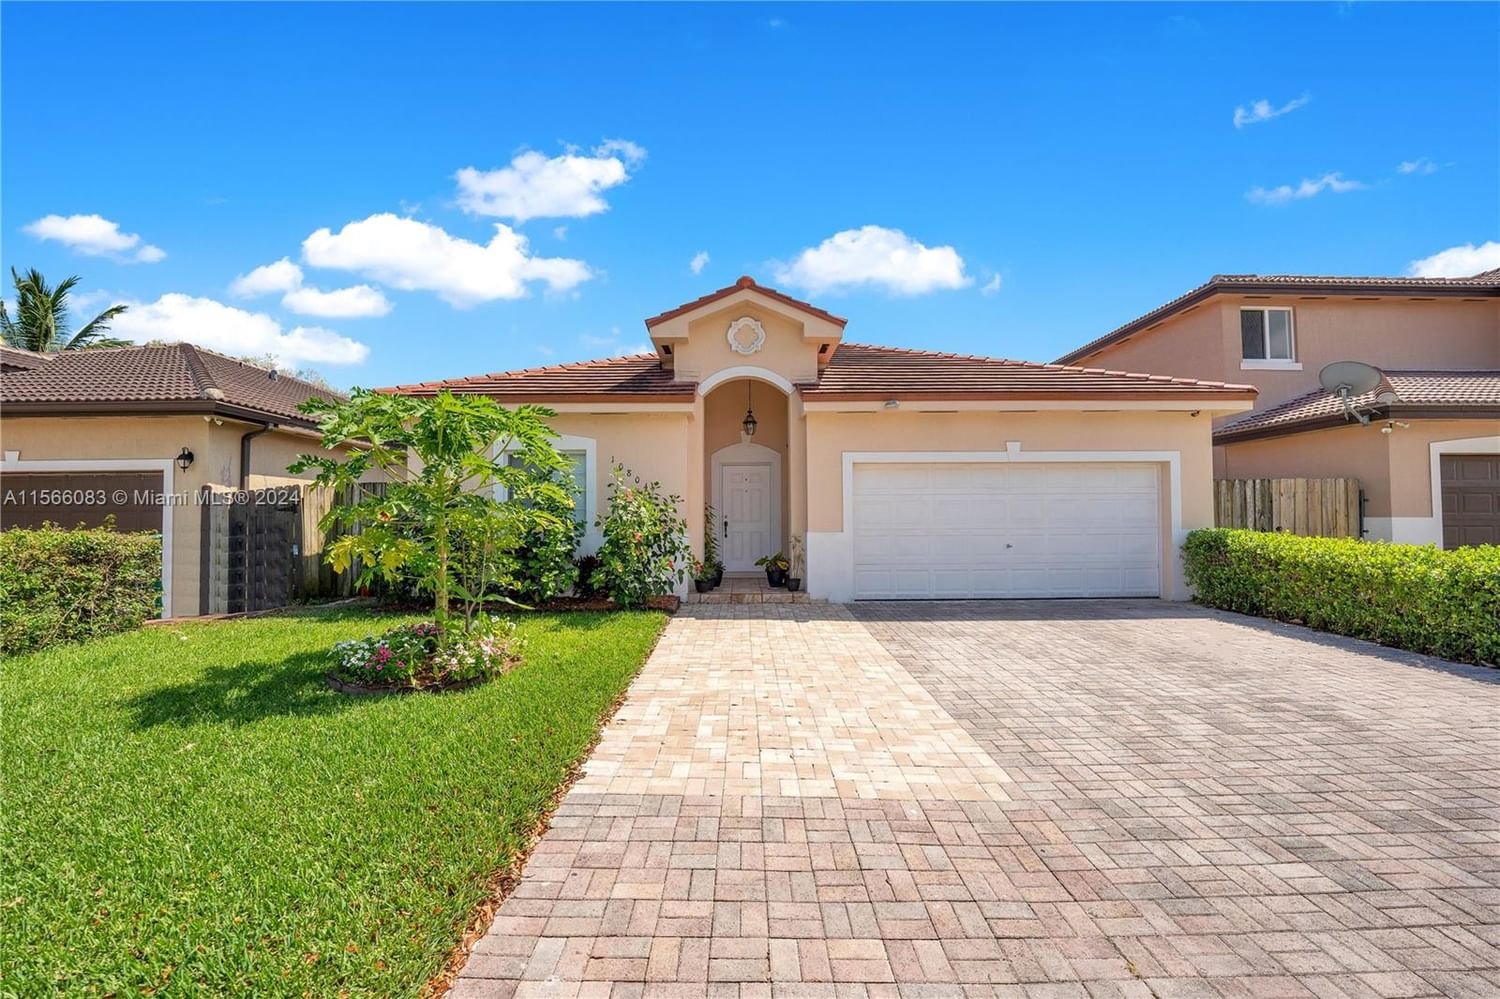 Real estate property located at 10804 229th St, Miami-Dade County, SILVER PALM LAKE, Miami, FL